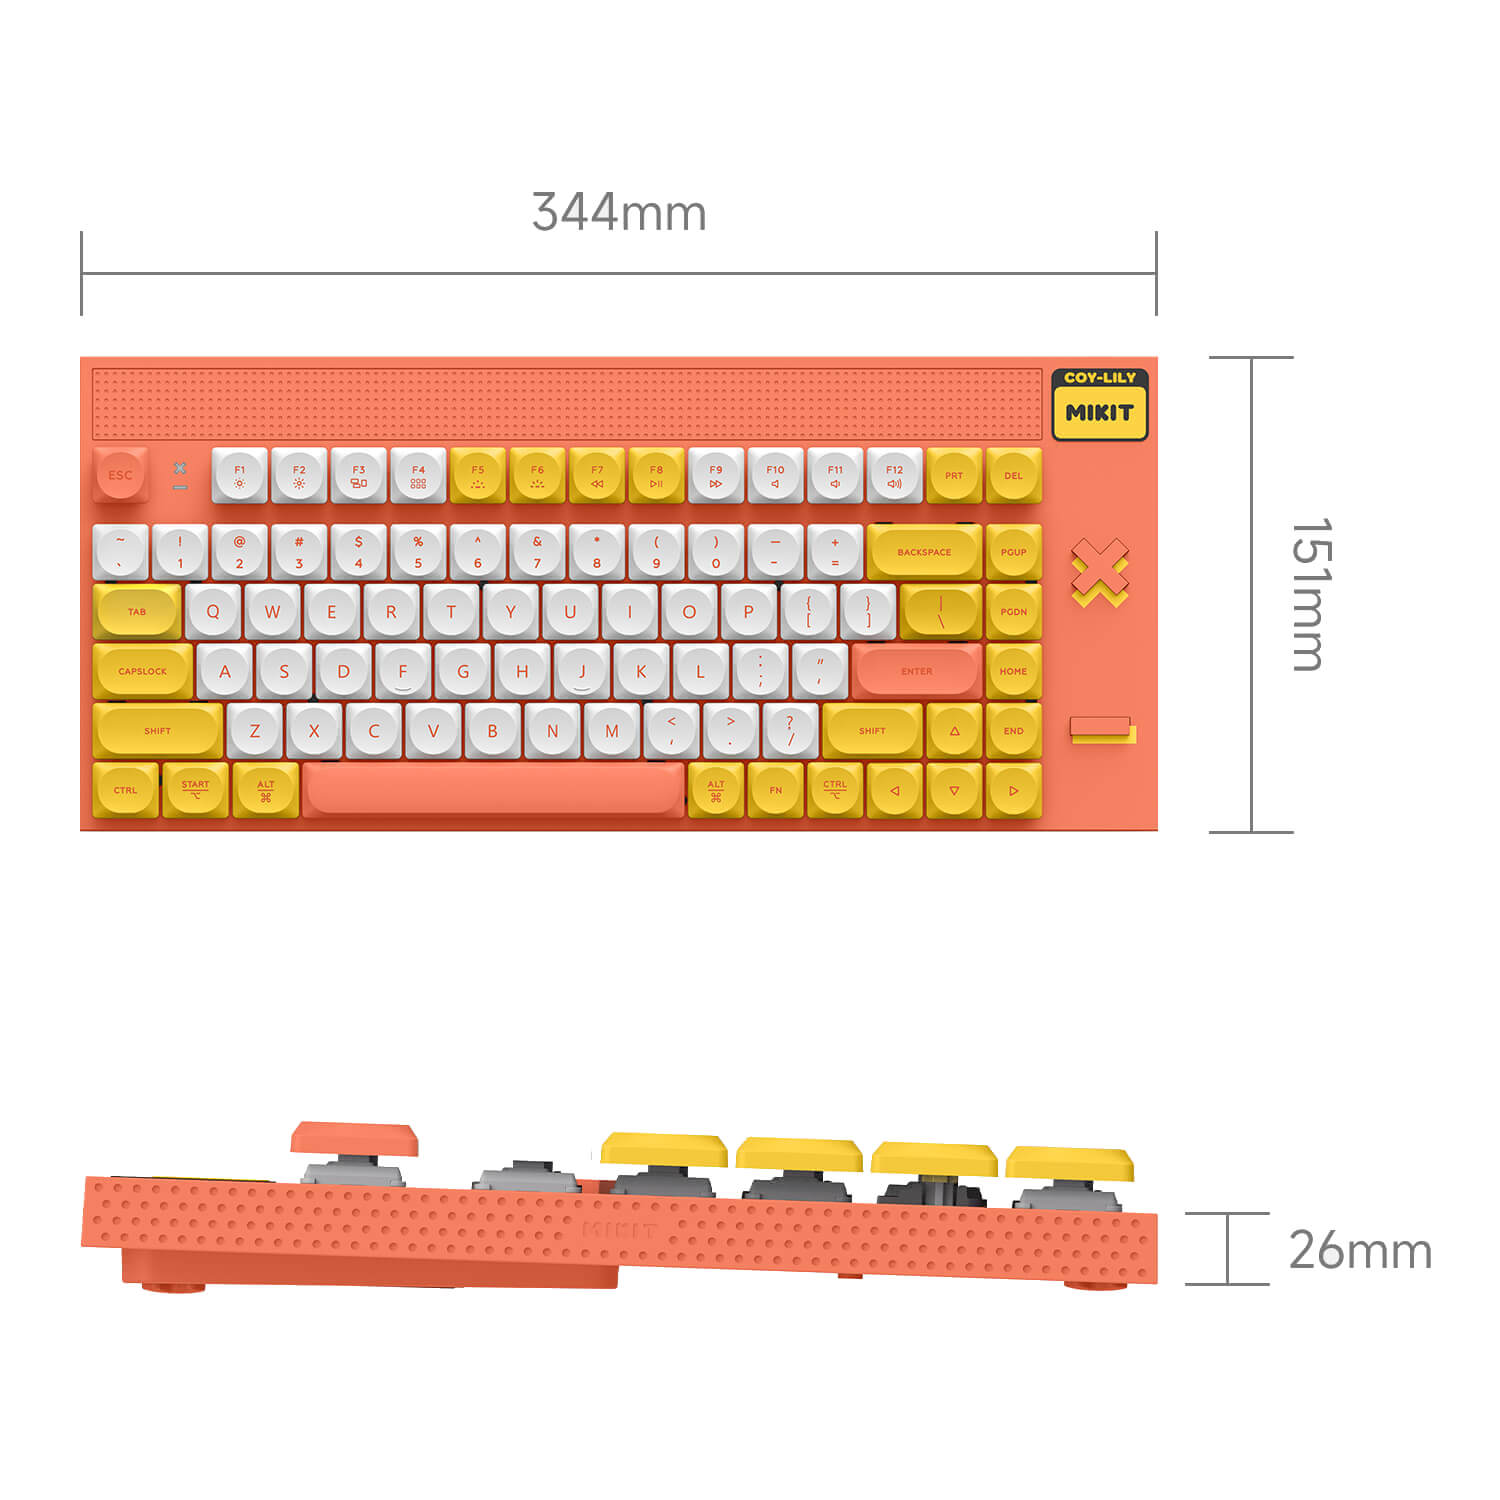 CL80 Marmalade Low Profile Keyboard